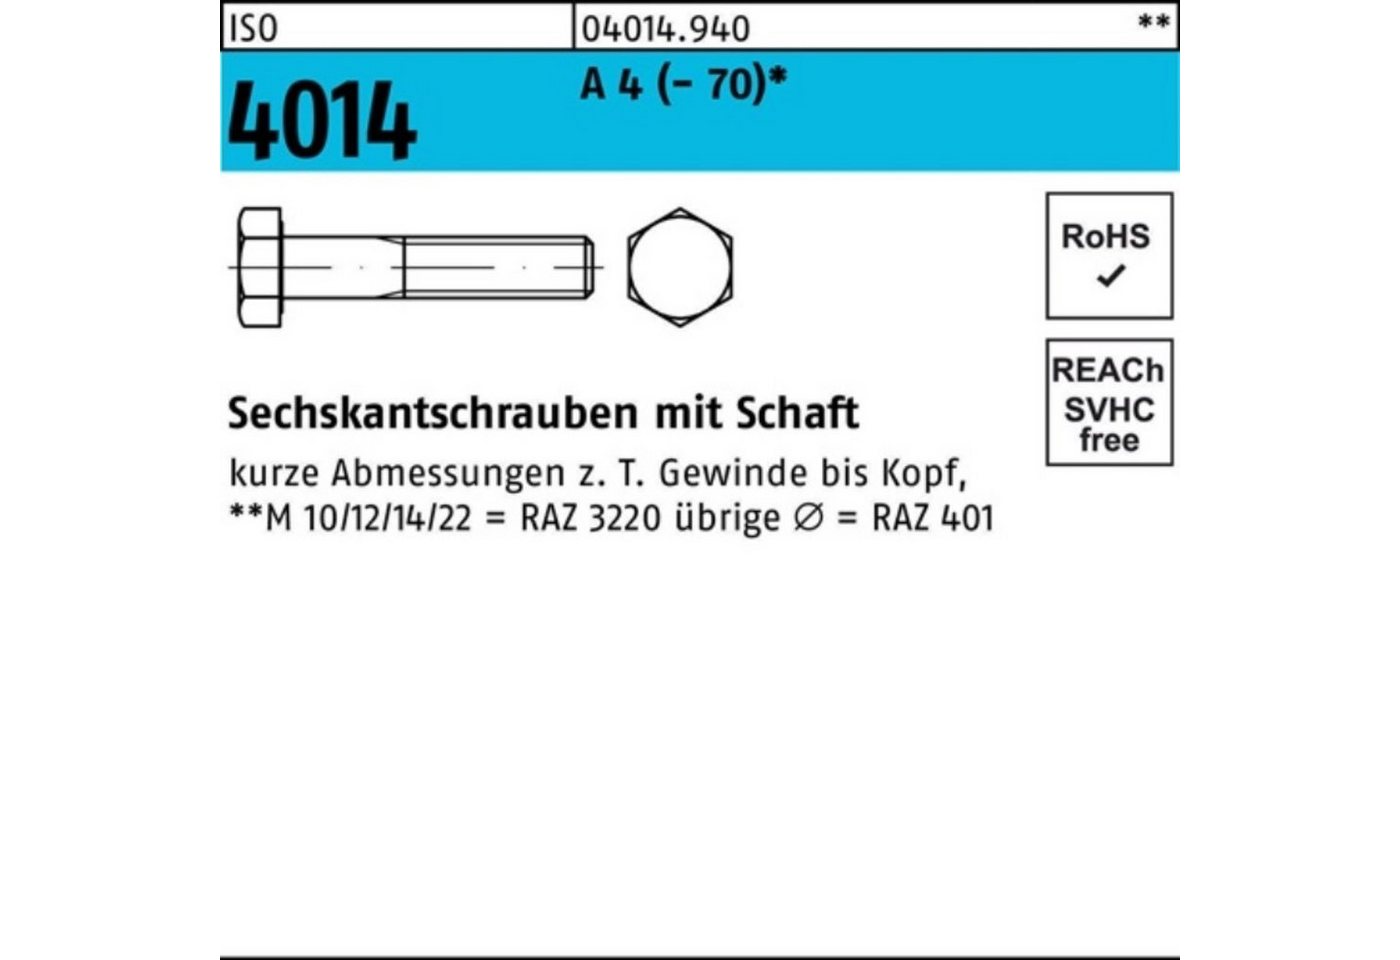 Bufab Sechskantschraube 100er Pack Sechskantschraube ISO 4014 Schaft M16x 200 A 4 (70) 1 St von Bufab